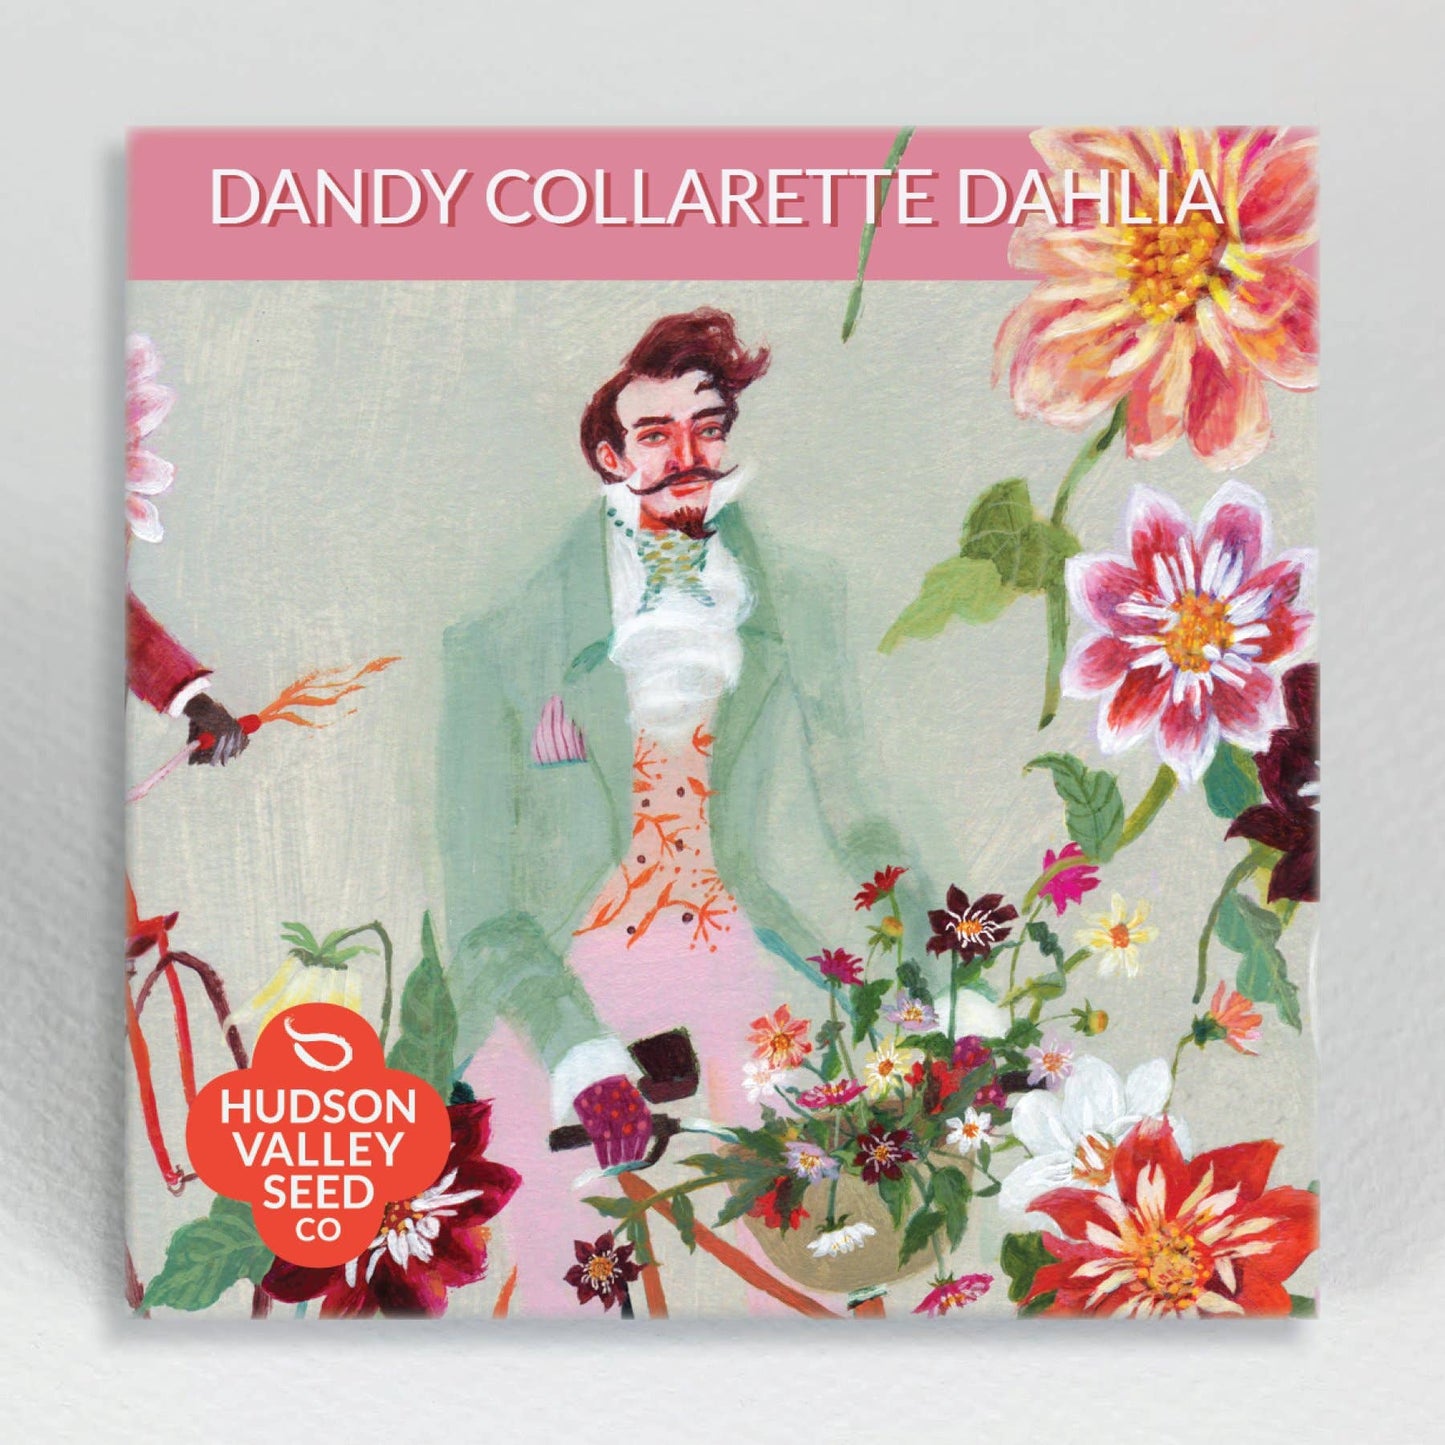 Dandy Collarette Dahlia Mix